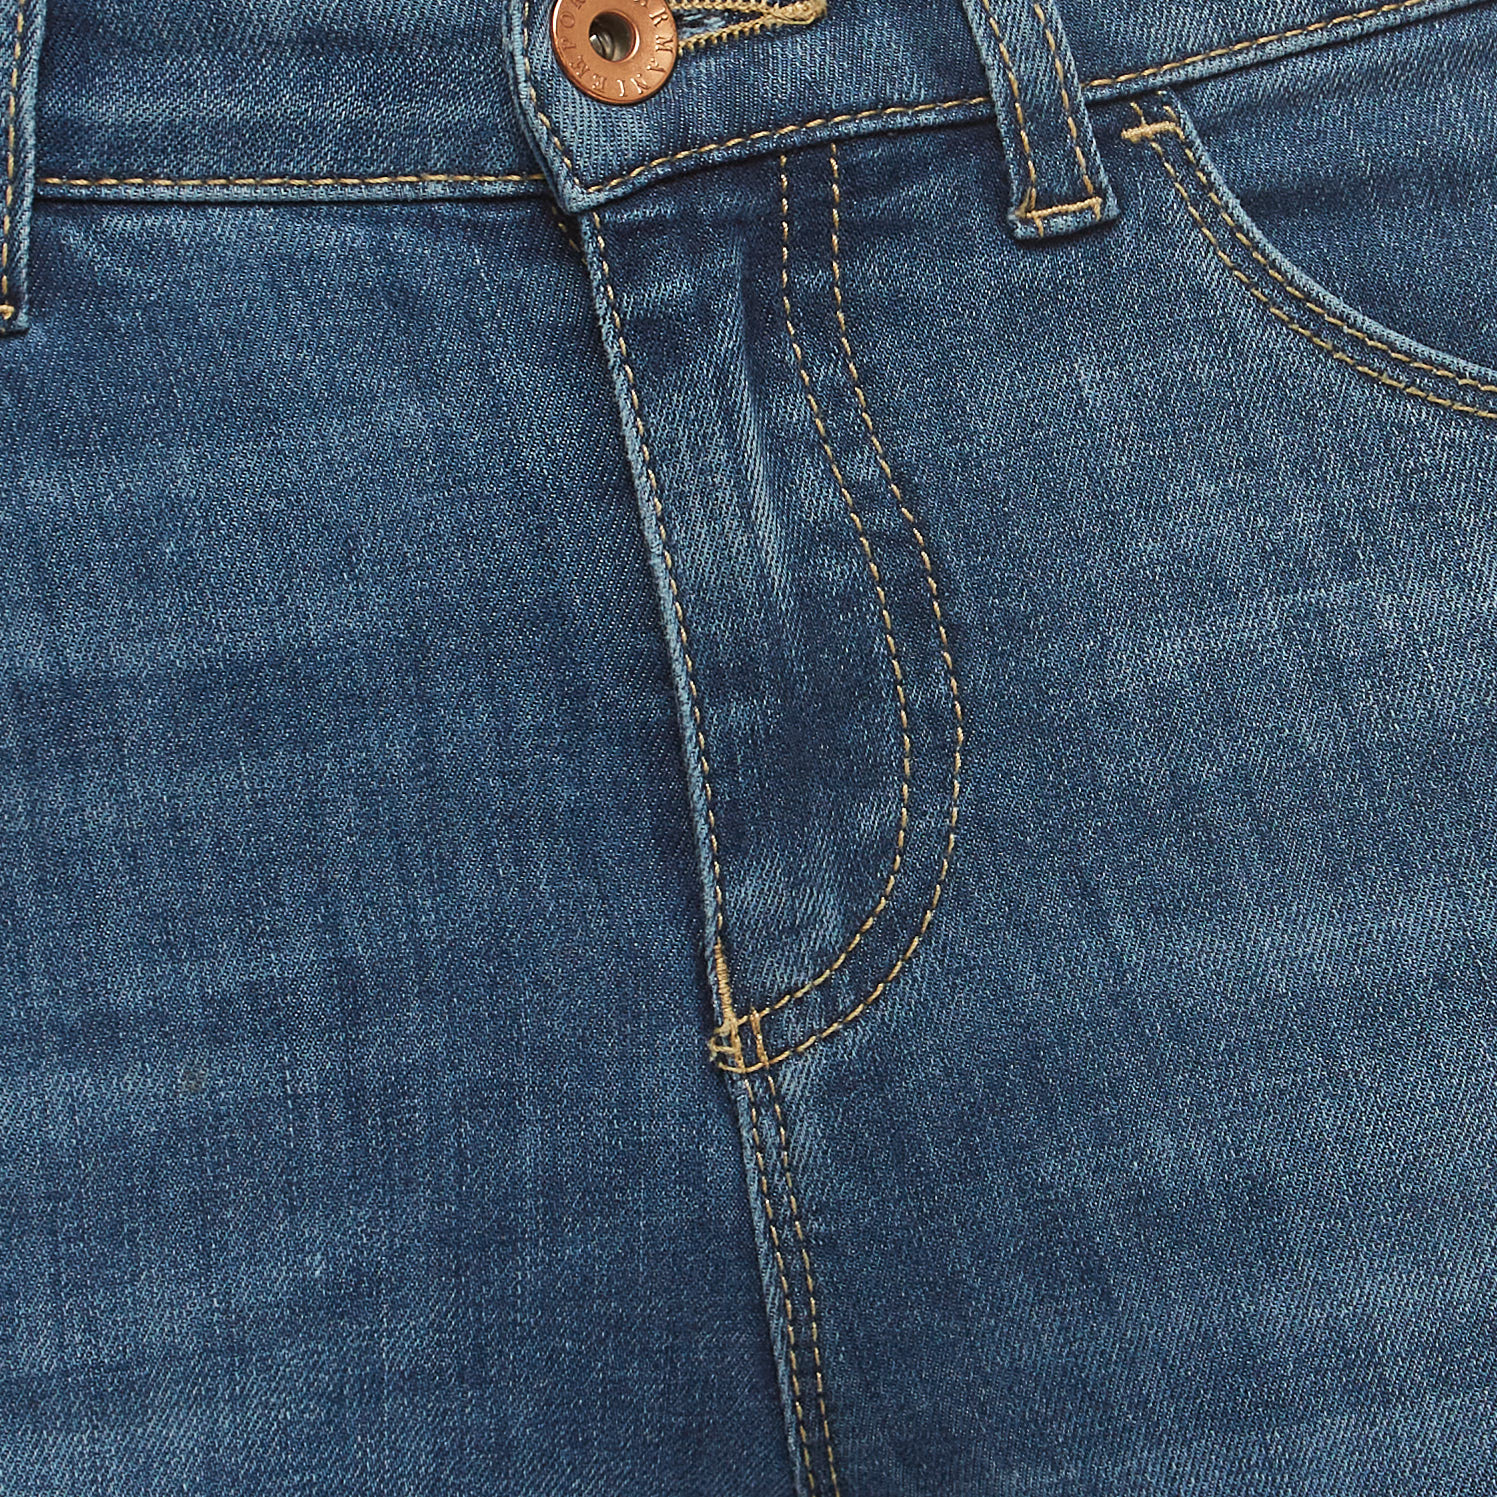 Emporio Armani Blue Denim Skinny Jeans S Waist 26''